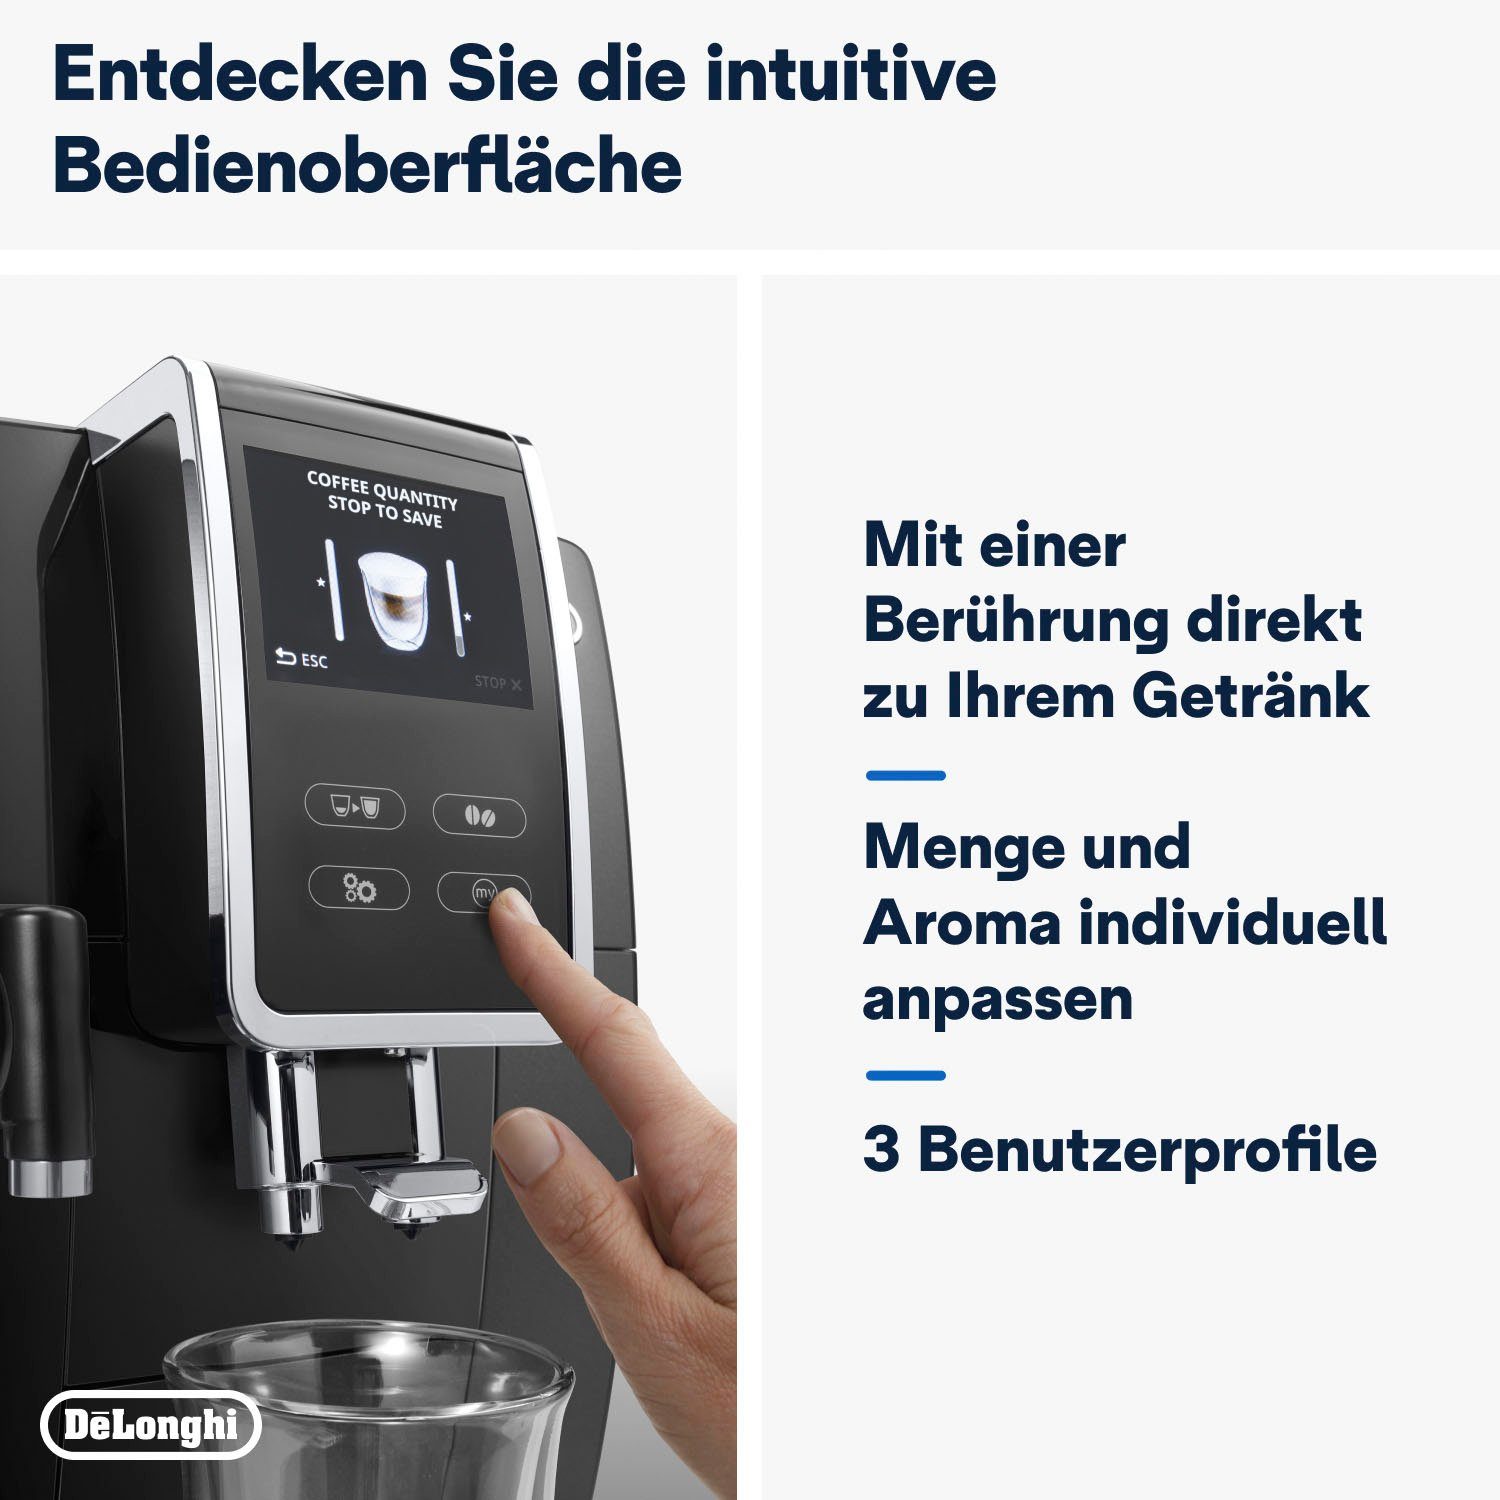 De'Longhi Kaffeevollautomat Dinamica Plus ECAM LatteCrema mit und Milchsystem 370.70.B, Kaffeekannenfunktion